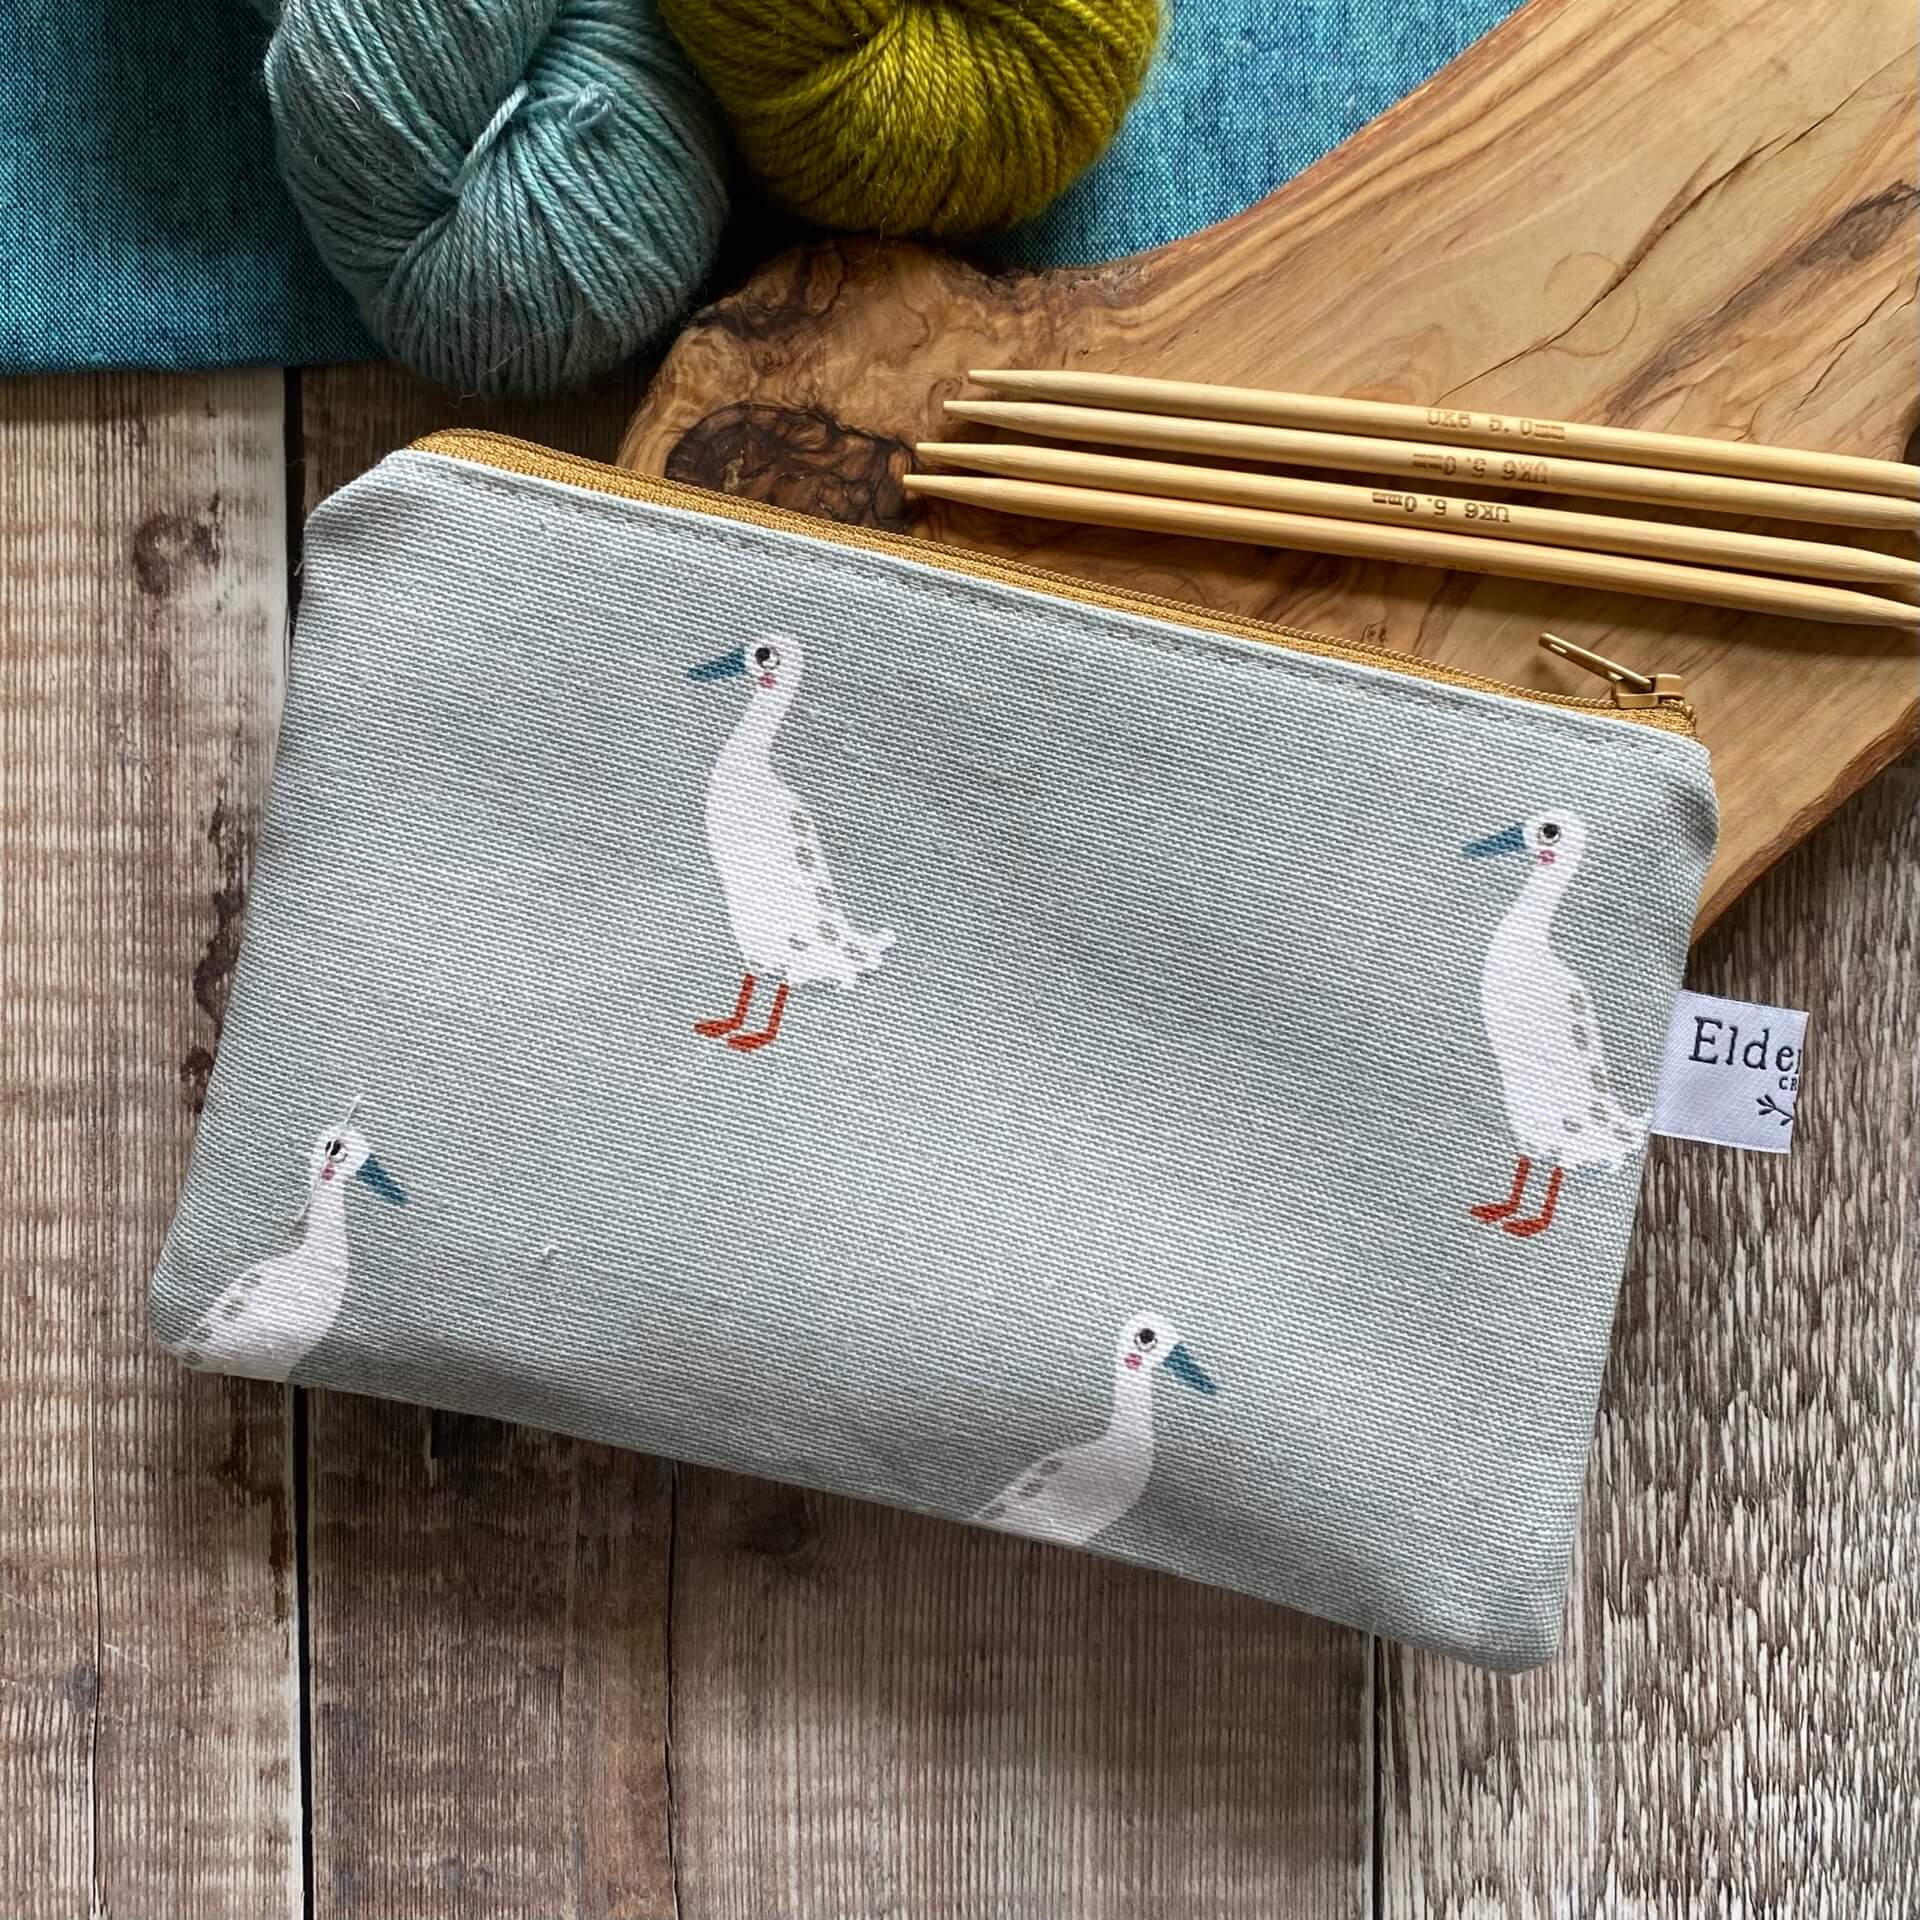 Knitting notions pouch - Runner Ducks